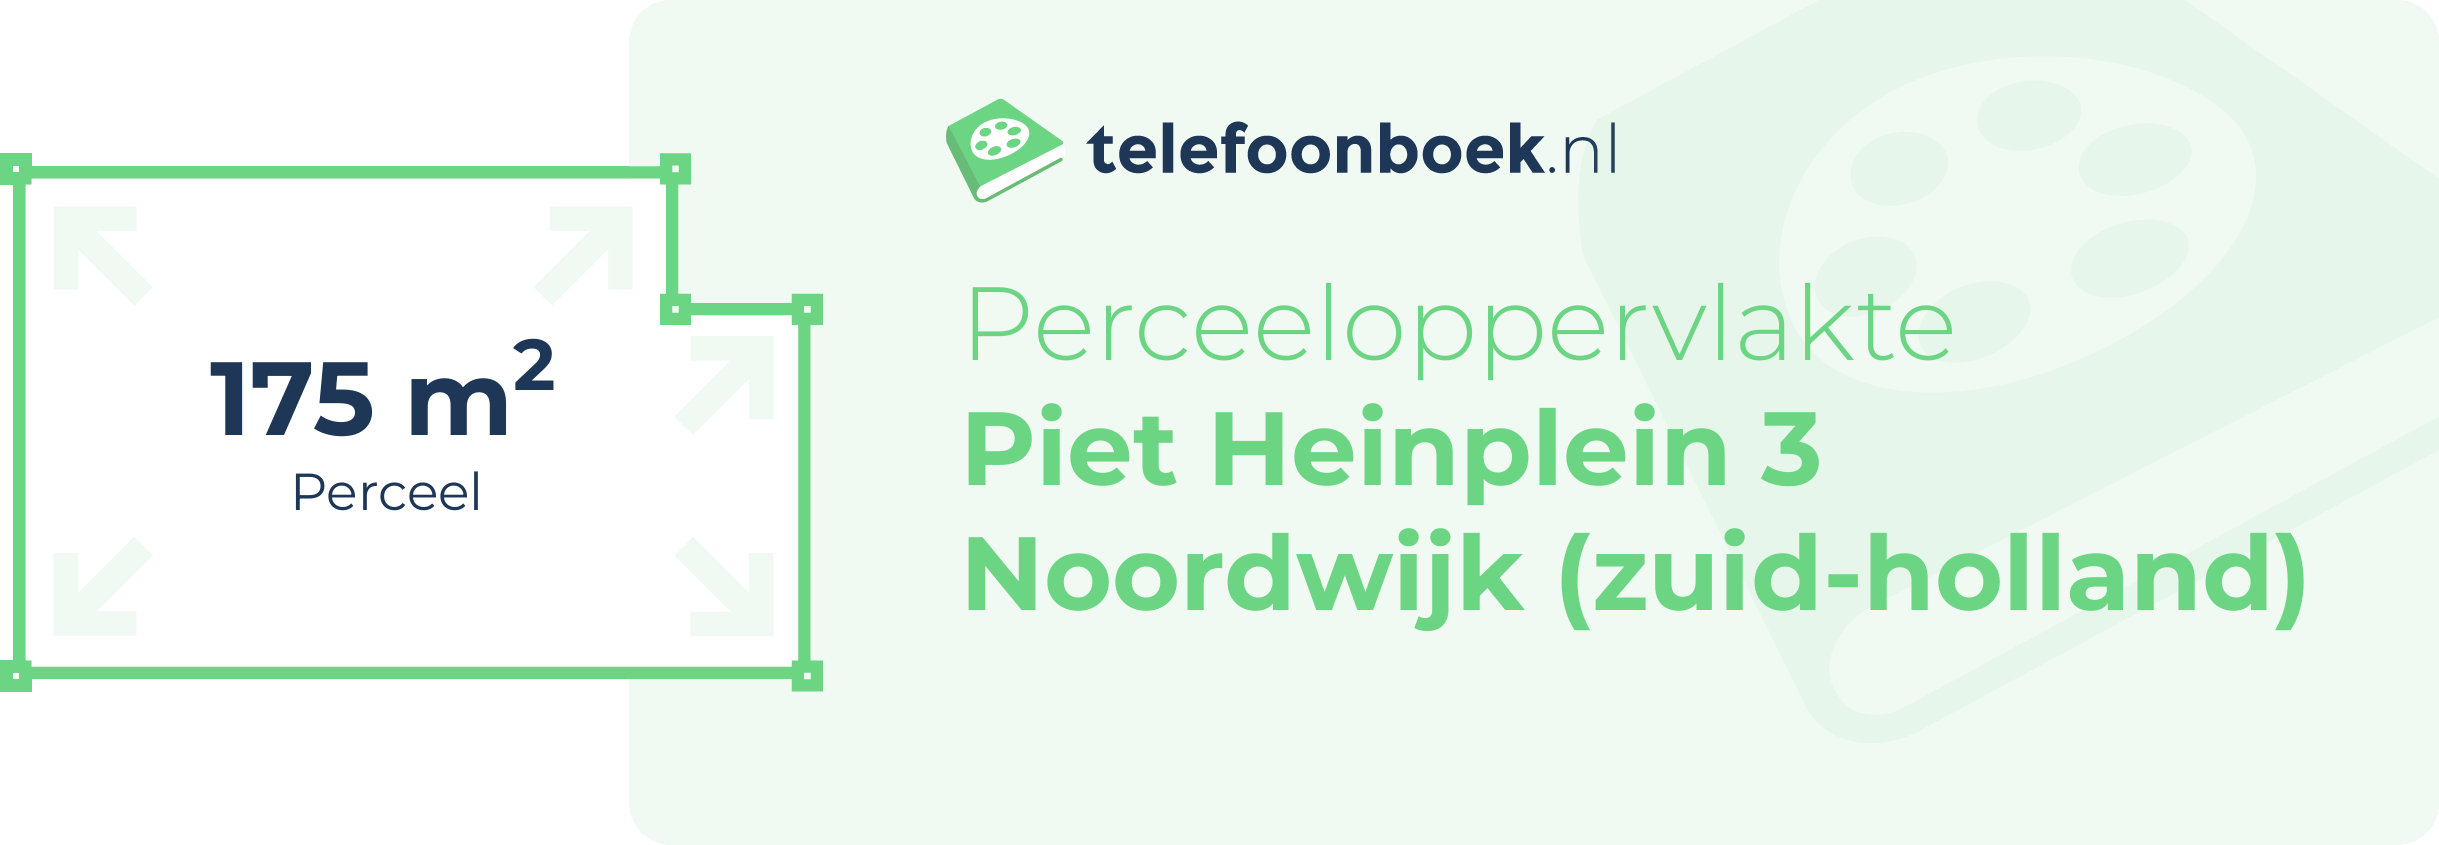 Perceeloppervlakte Piet Heinplein 3 Noordwijk (Zuid-Holland)